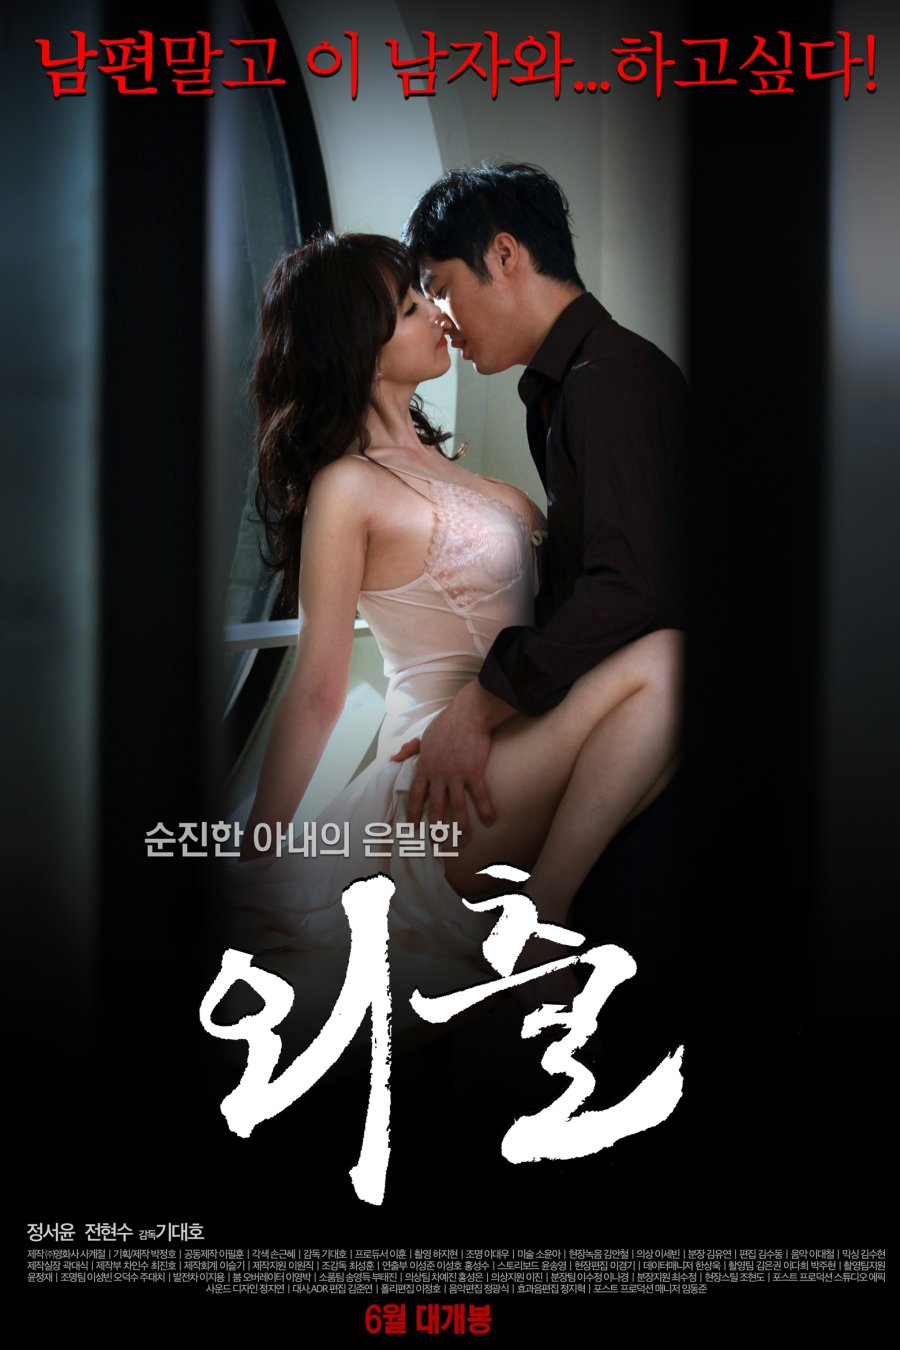 Korea movie18+